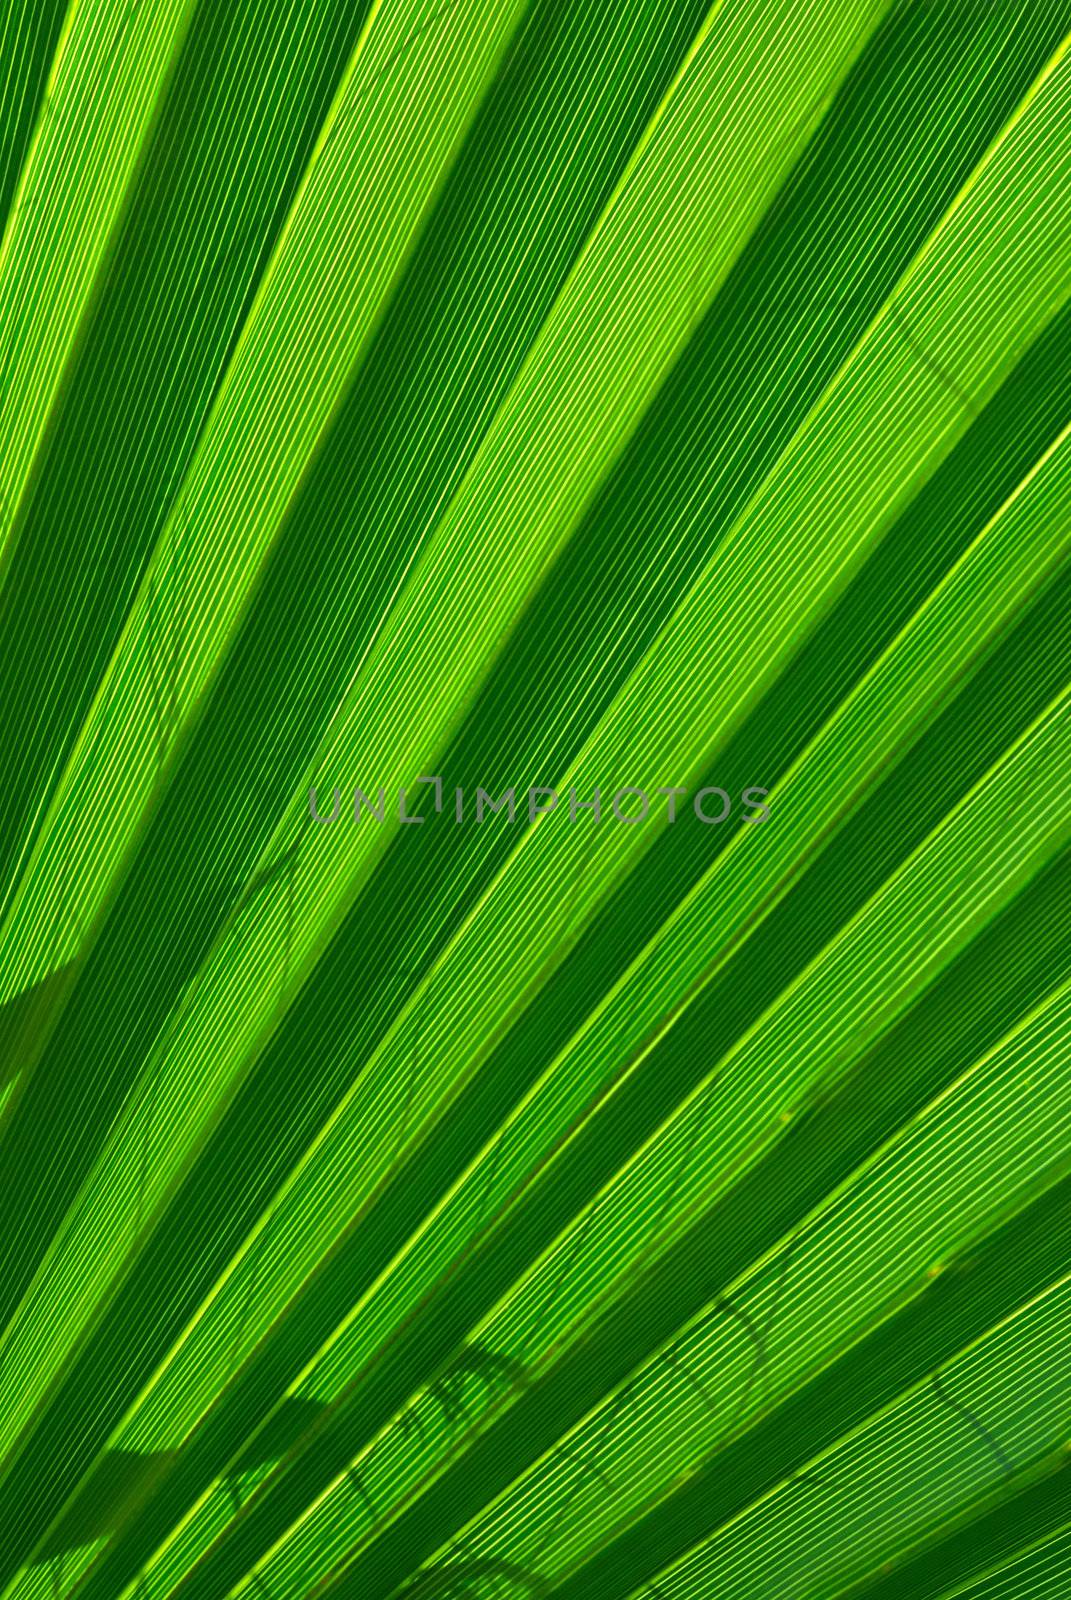 Green palm tree leaf background by kirs-ua